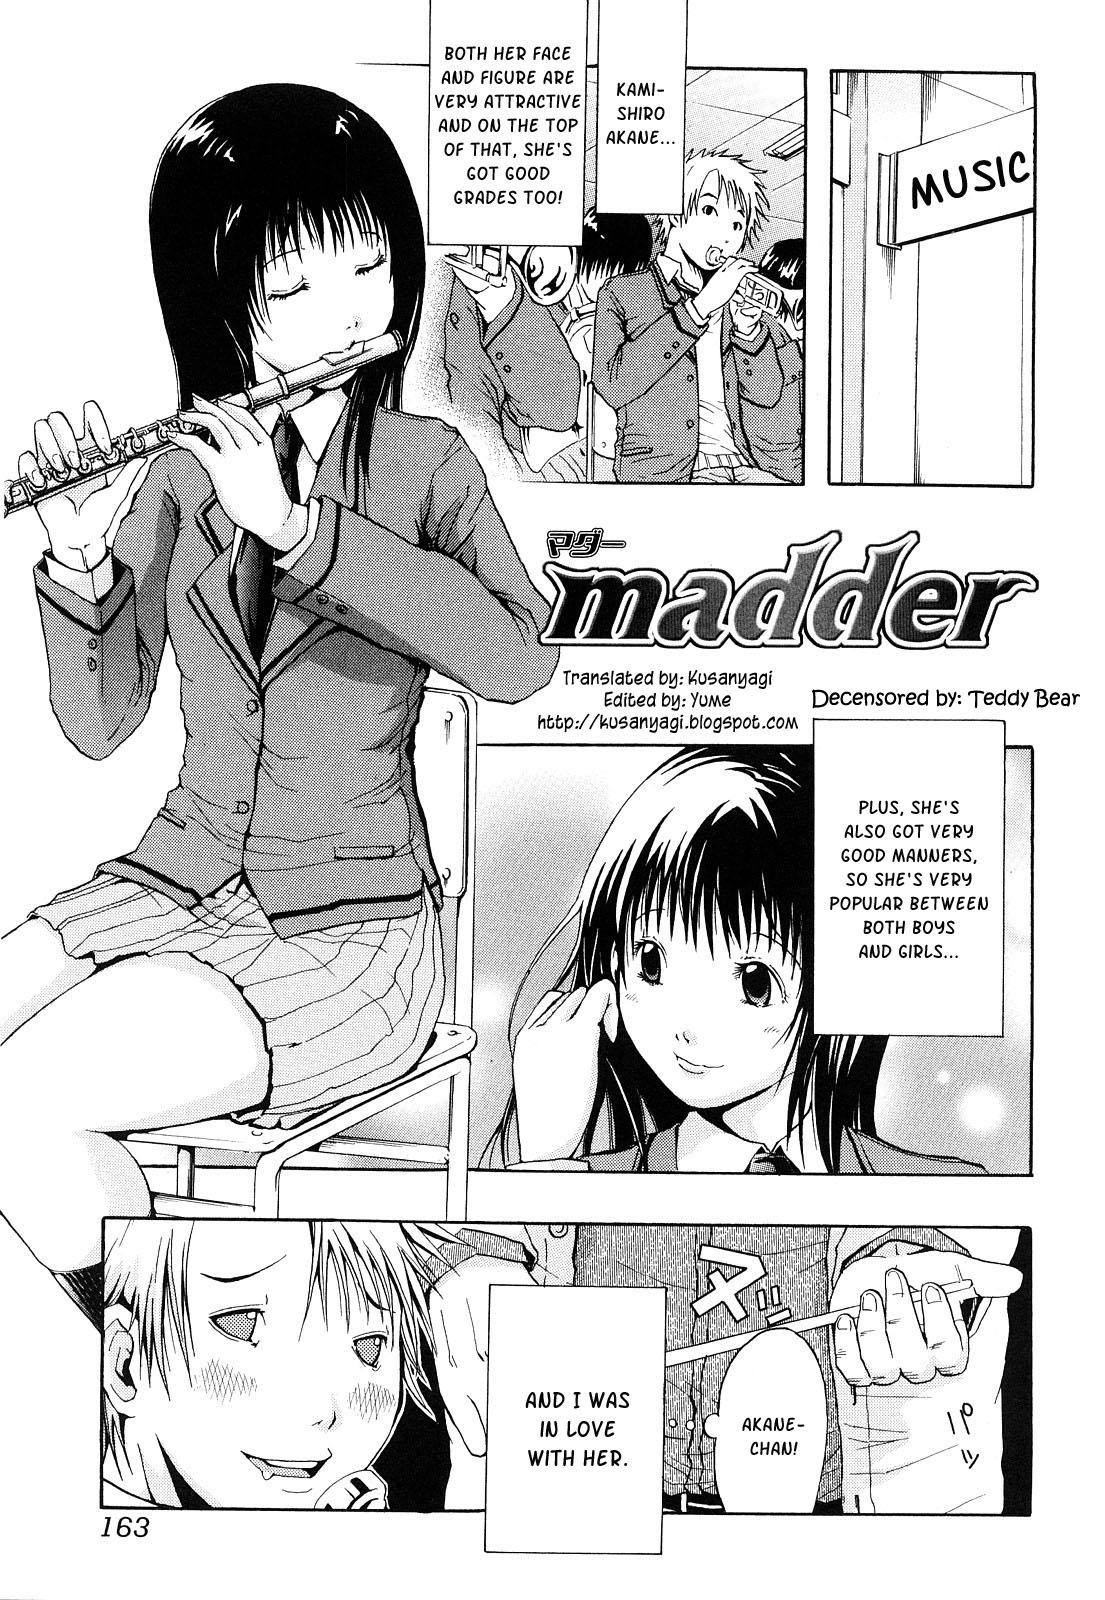 Messy Madder Puto - Page 1